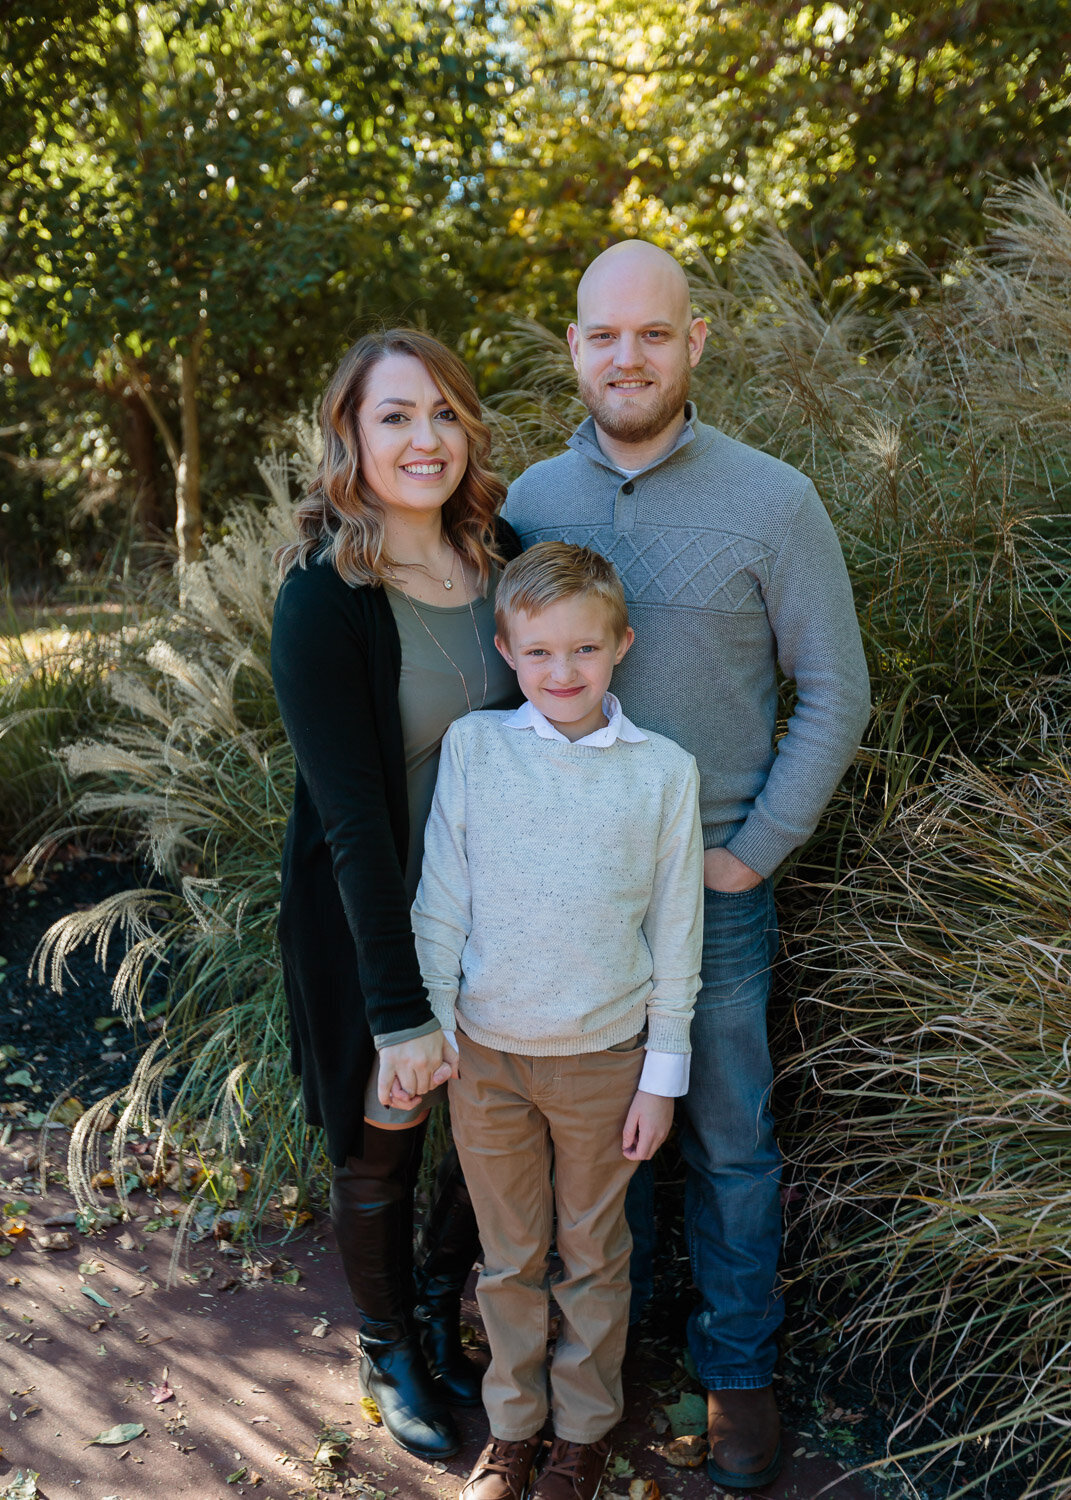 Burdette Park - Evansville Family Photographer -  Becht & Ross Families-25